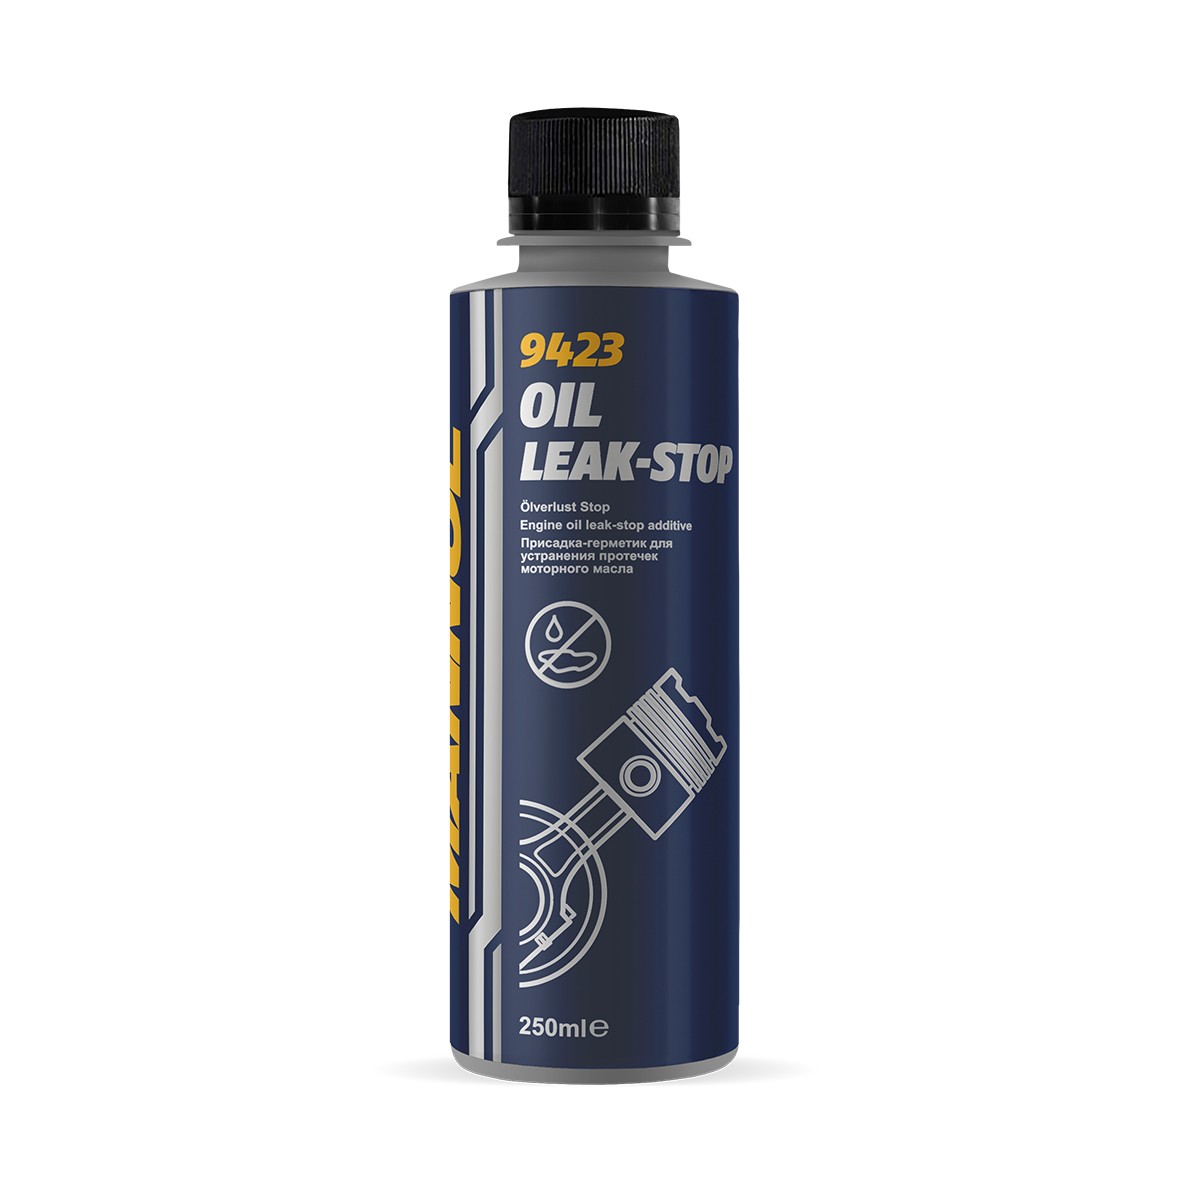 MANNOL Oil Leak-Stop MN9423025PET Engine oil additive Bottle, Capacity: 250ml